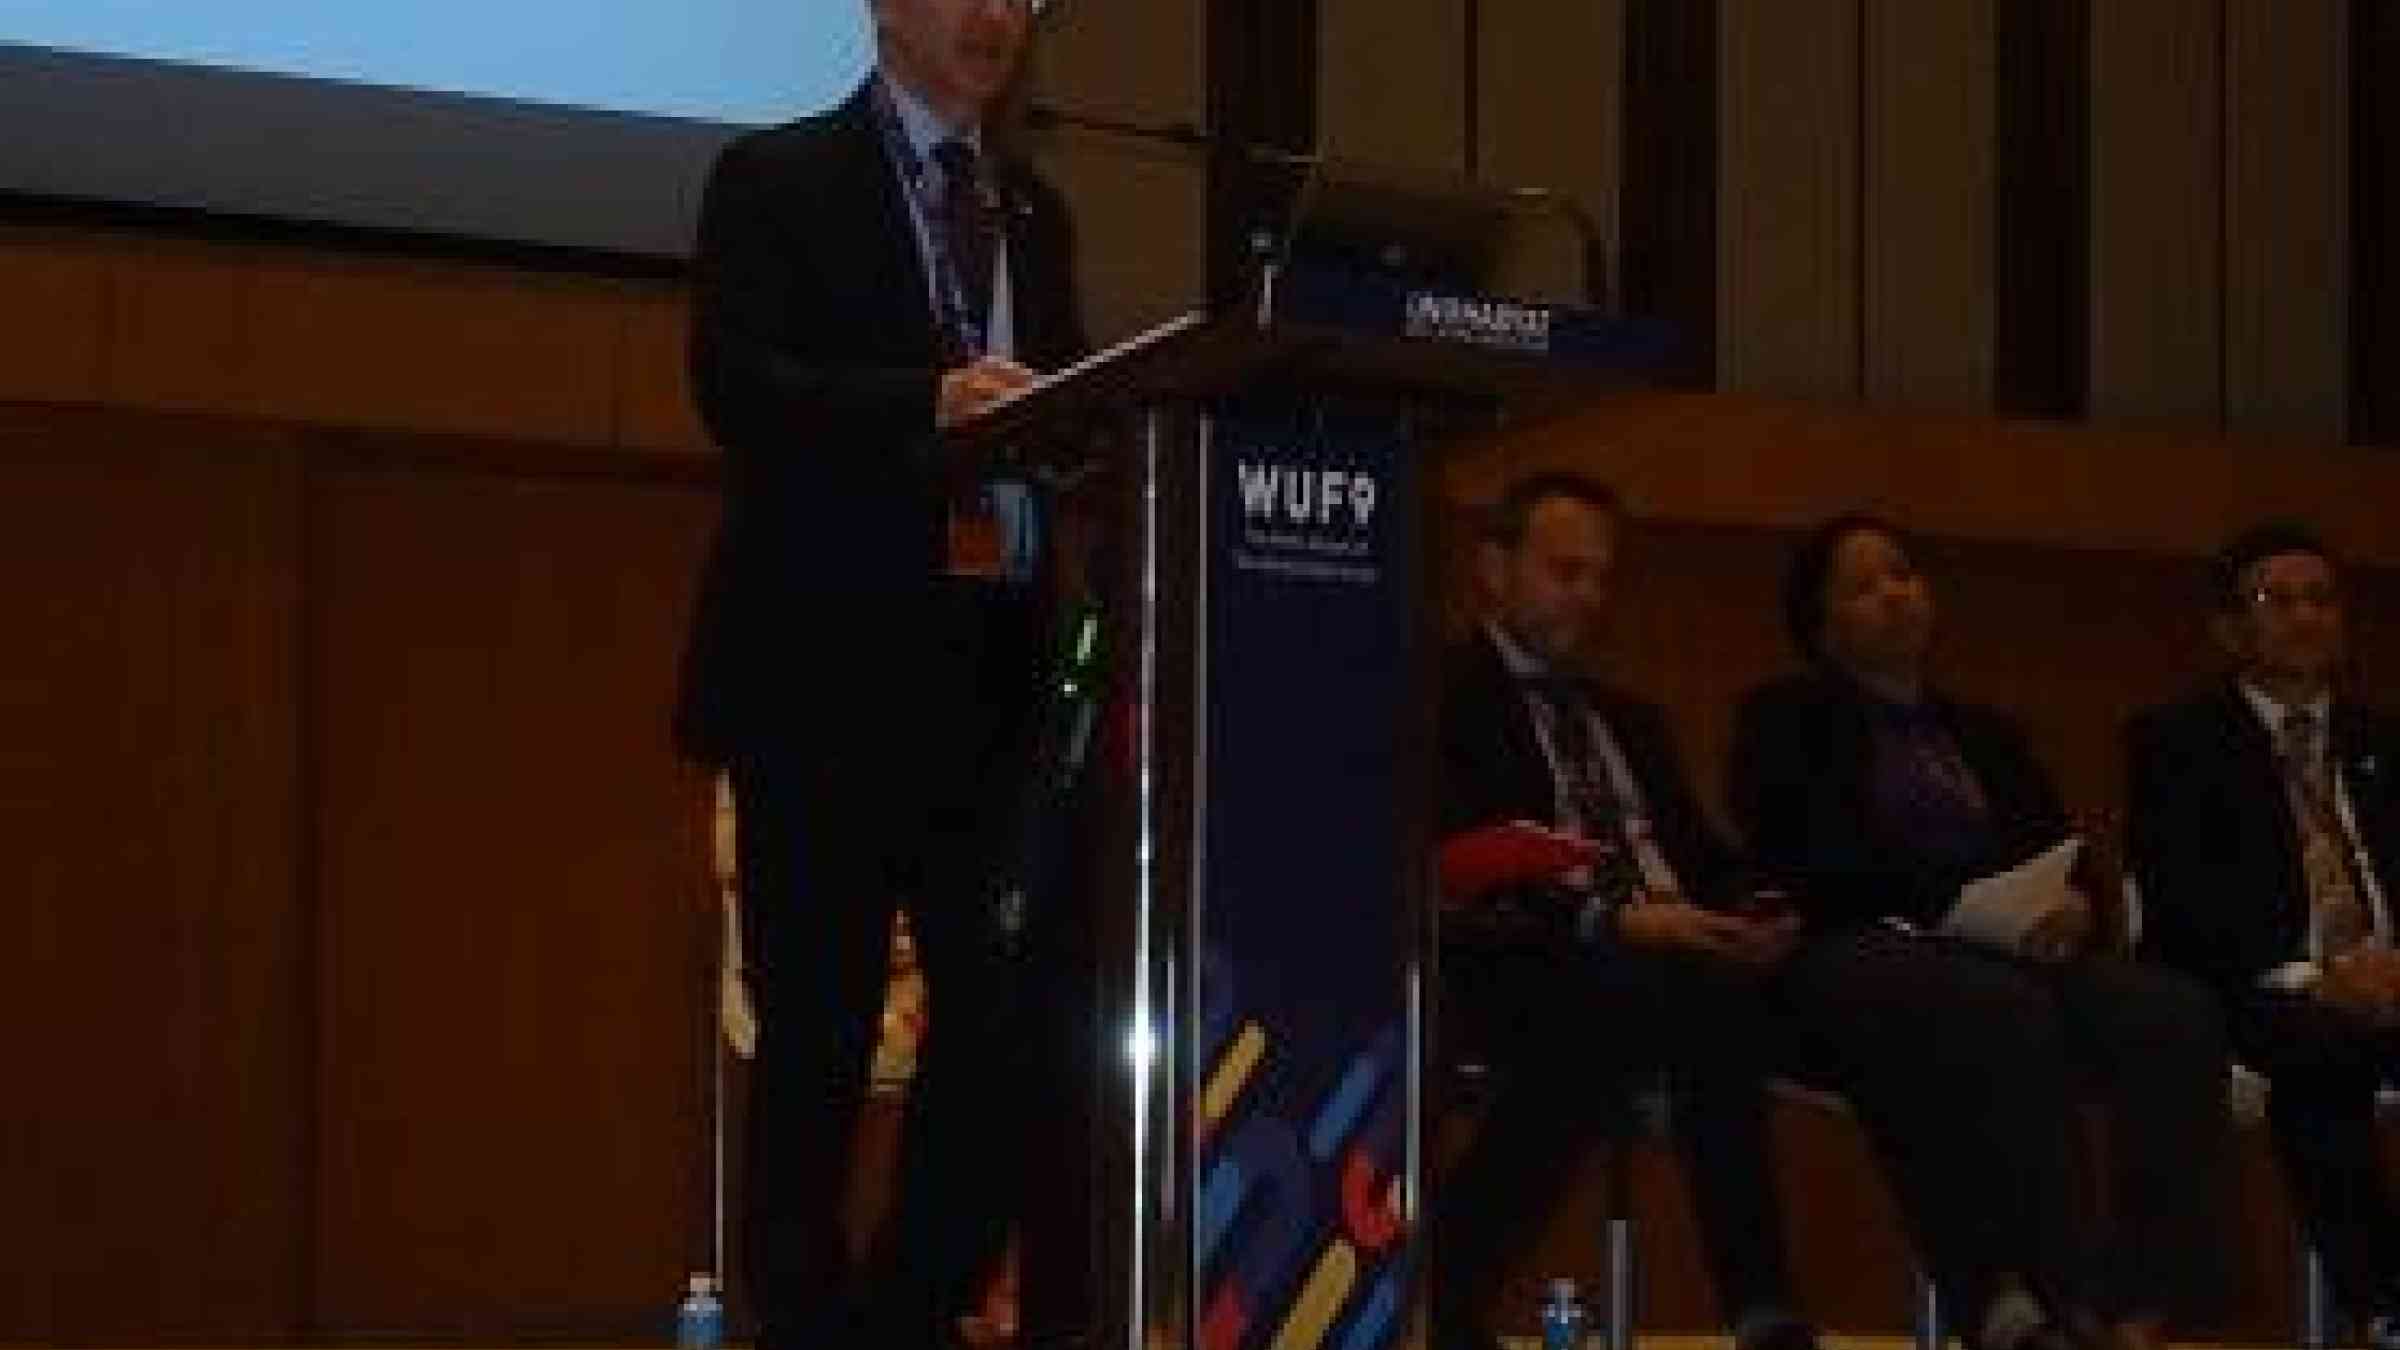 /Robert Glasser speaking at the World Urban Forum Special Session on Restoring Hope